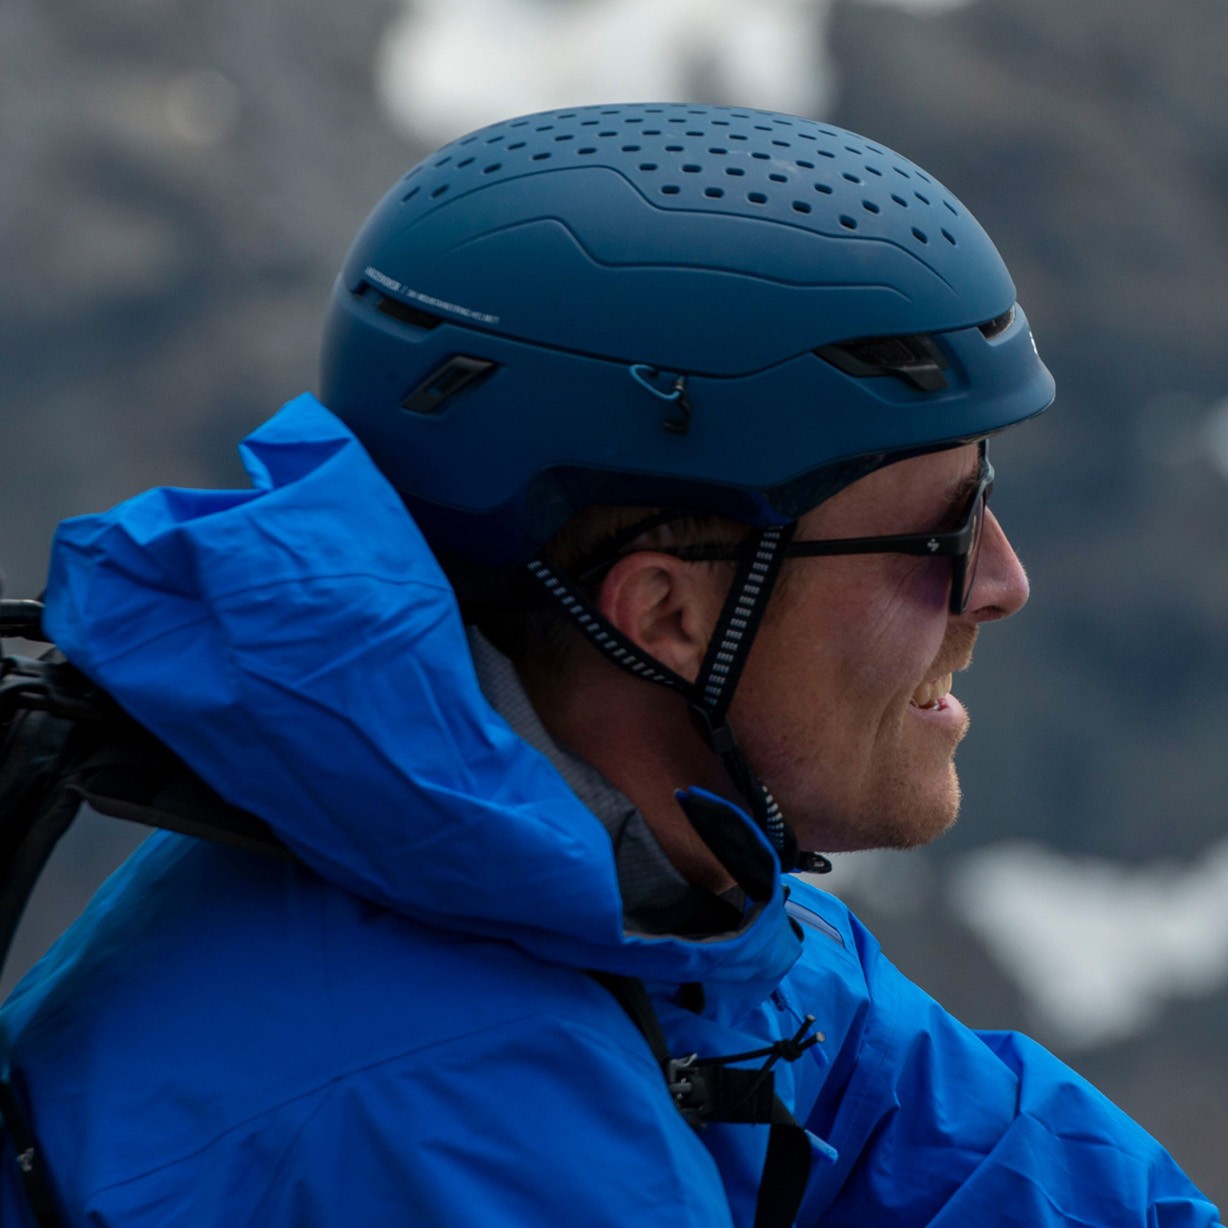 Sweet Protection Ascender MIPS Snowboard/Ski Helmet